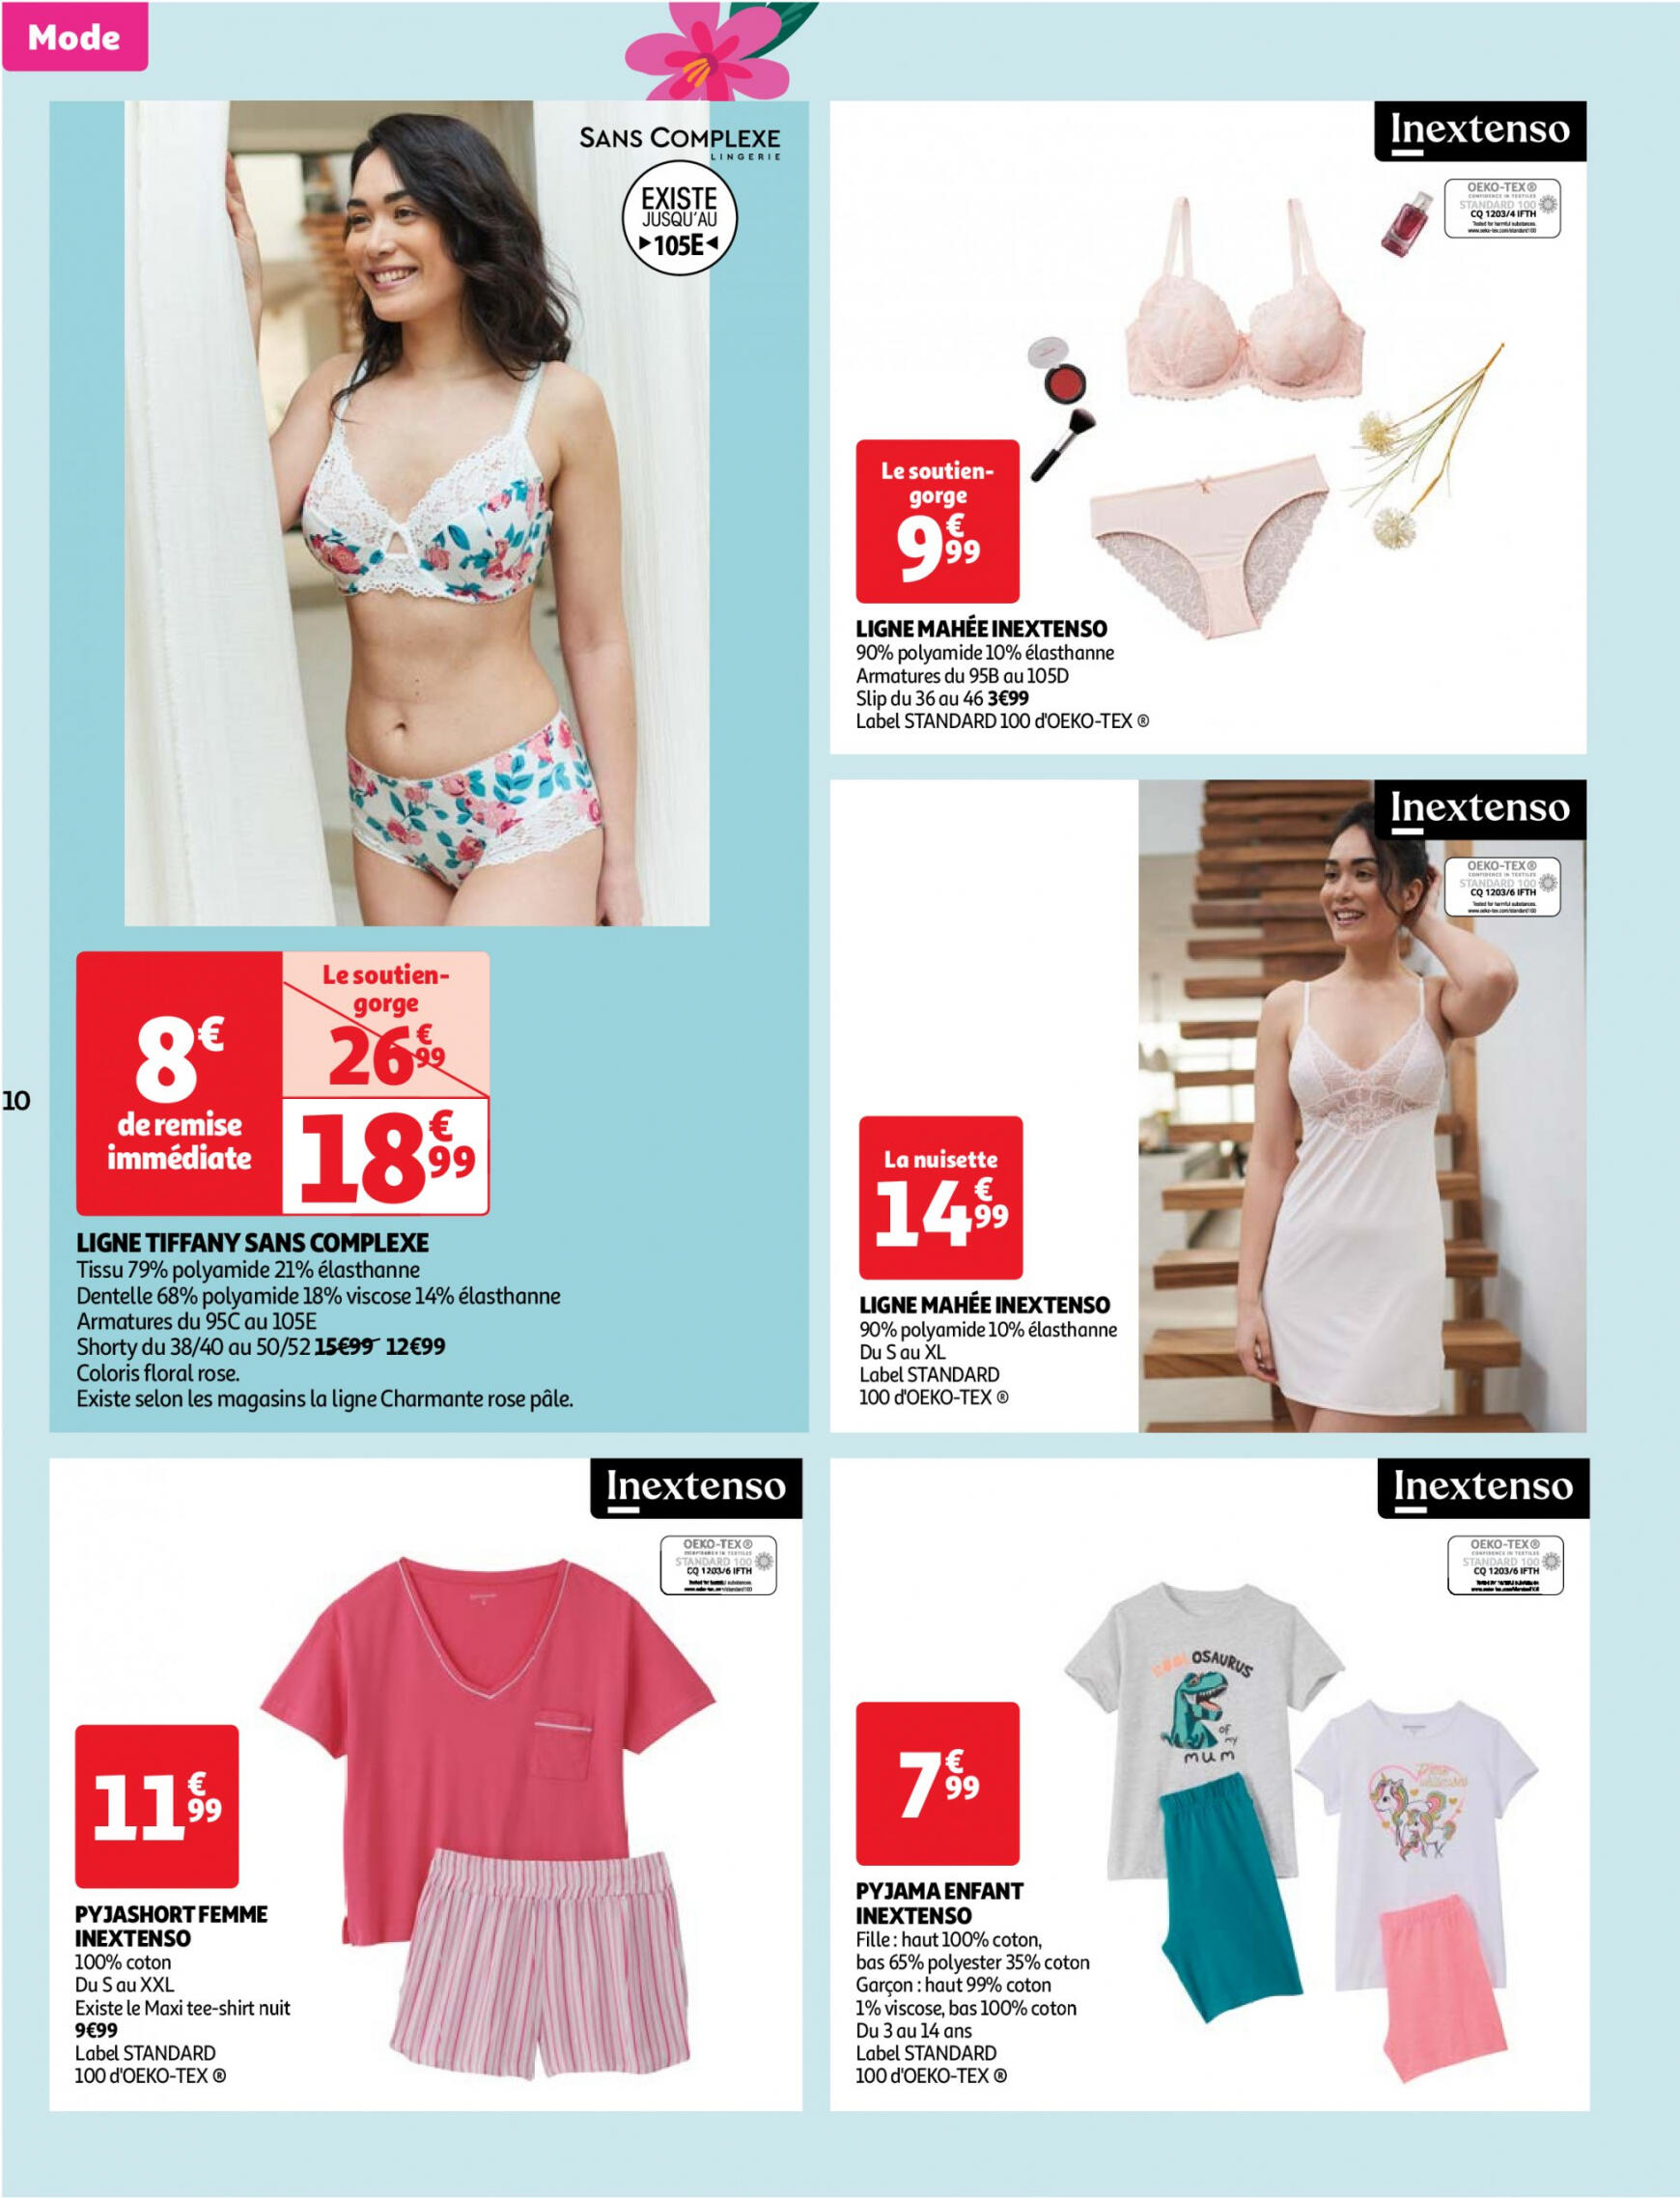 auchan - Auchan - Merci maman folder huidig 14.05. - 26.05. - page: 10